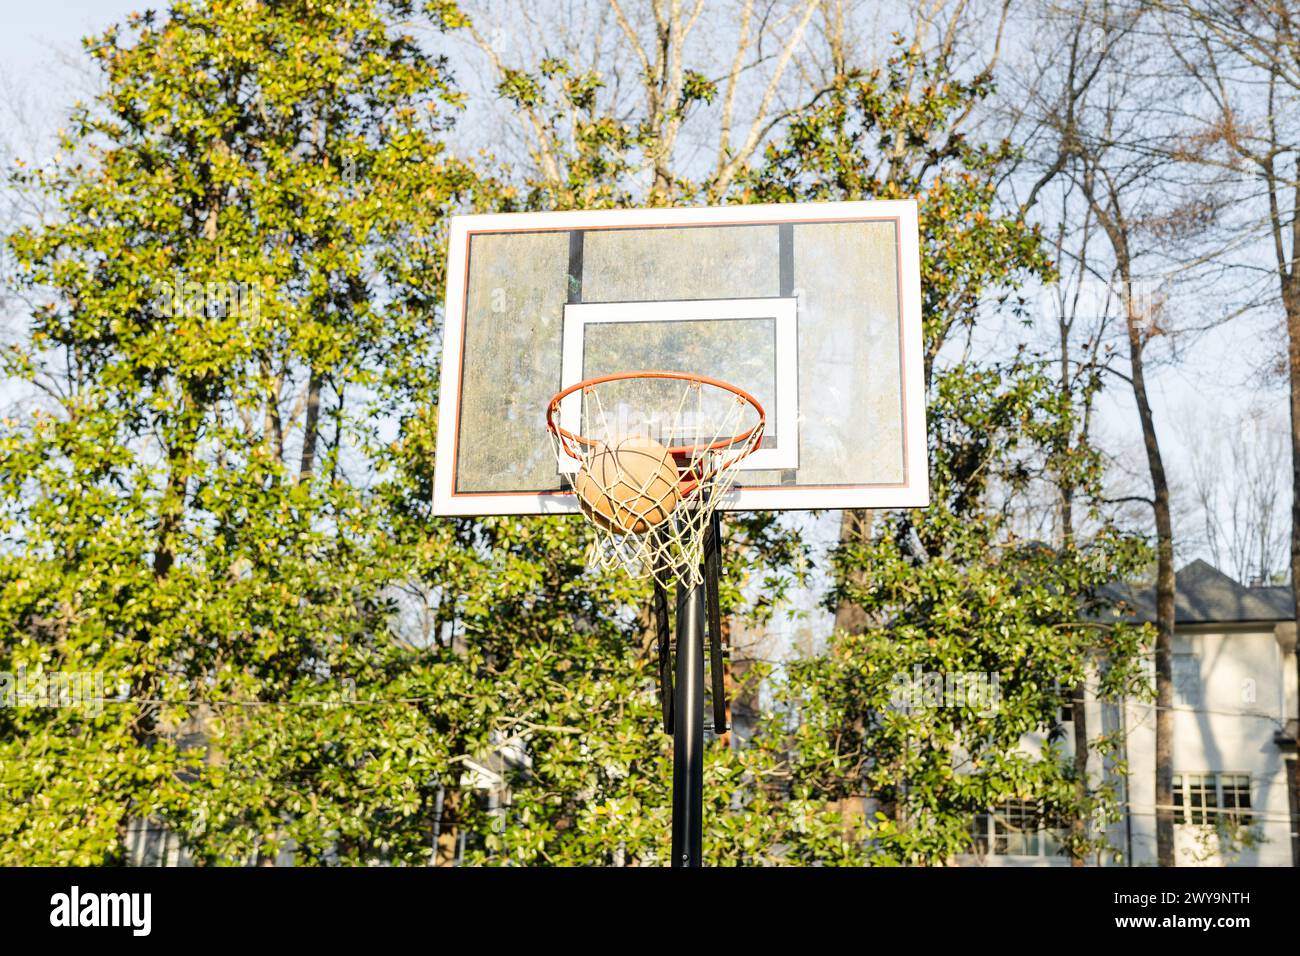 Basketball scoring in an outdoor hoop Stock Photo